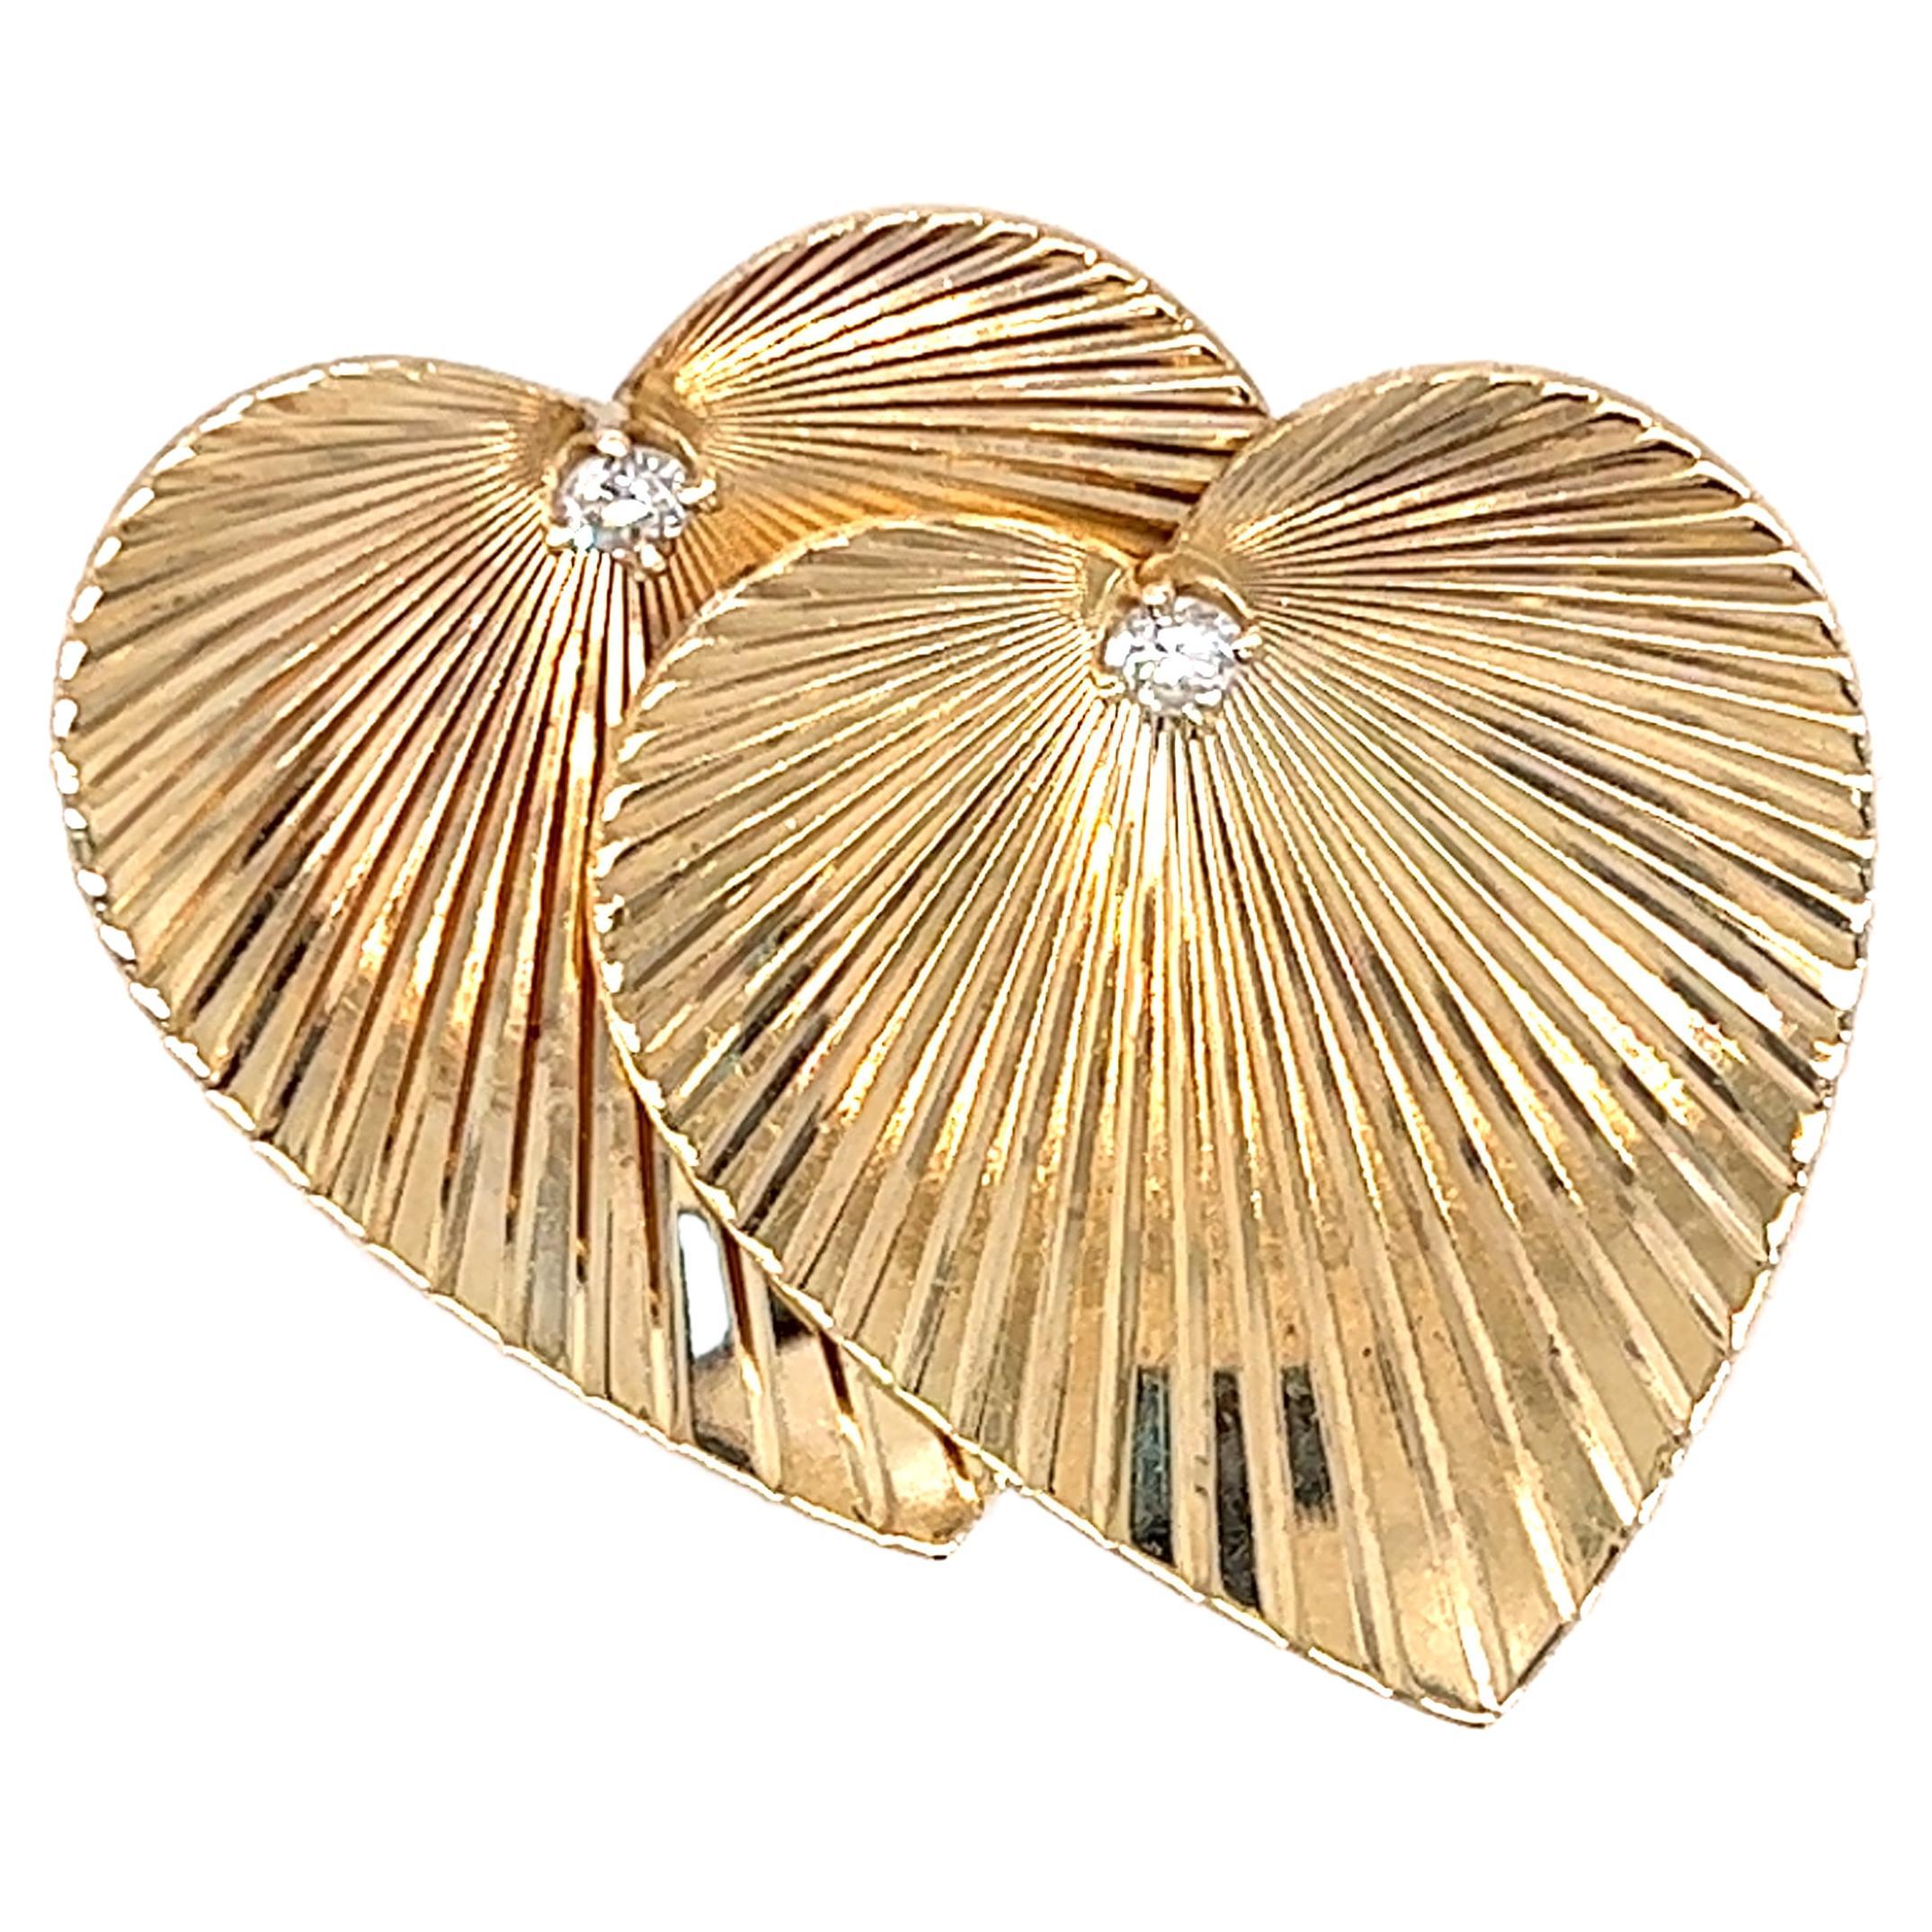 1960s Tiffany & Co. Diamond Heart Pin in 14 Karat Gold